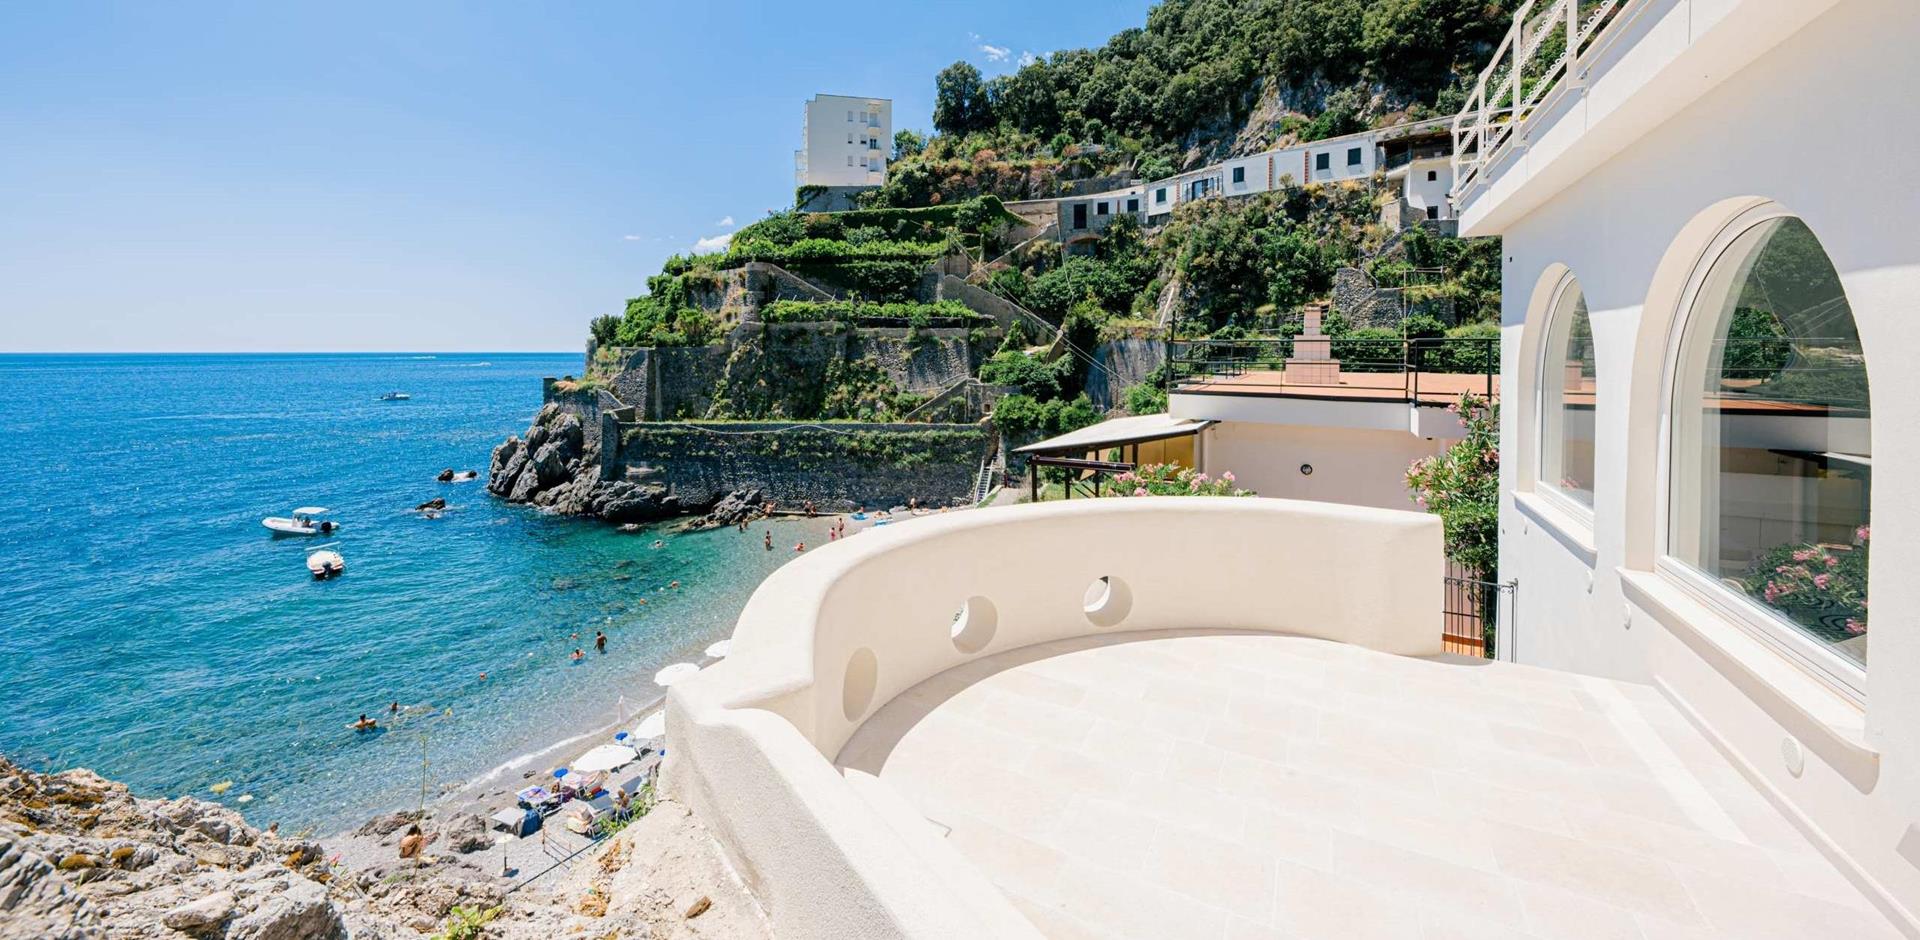 View of the bay, Casa al Lido, Amalfi Coast, Italy